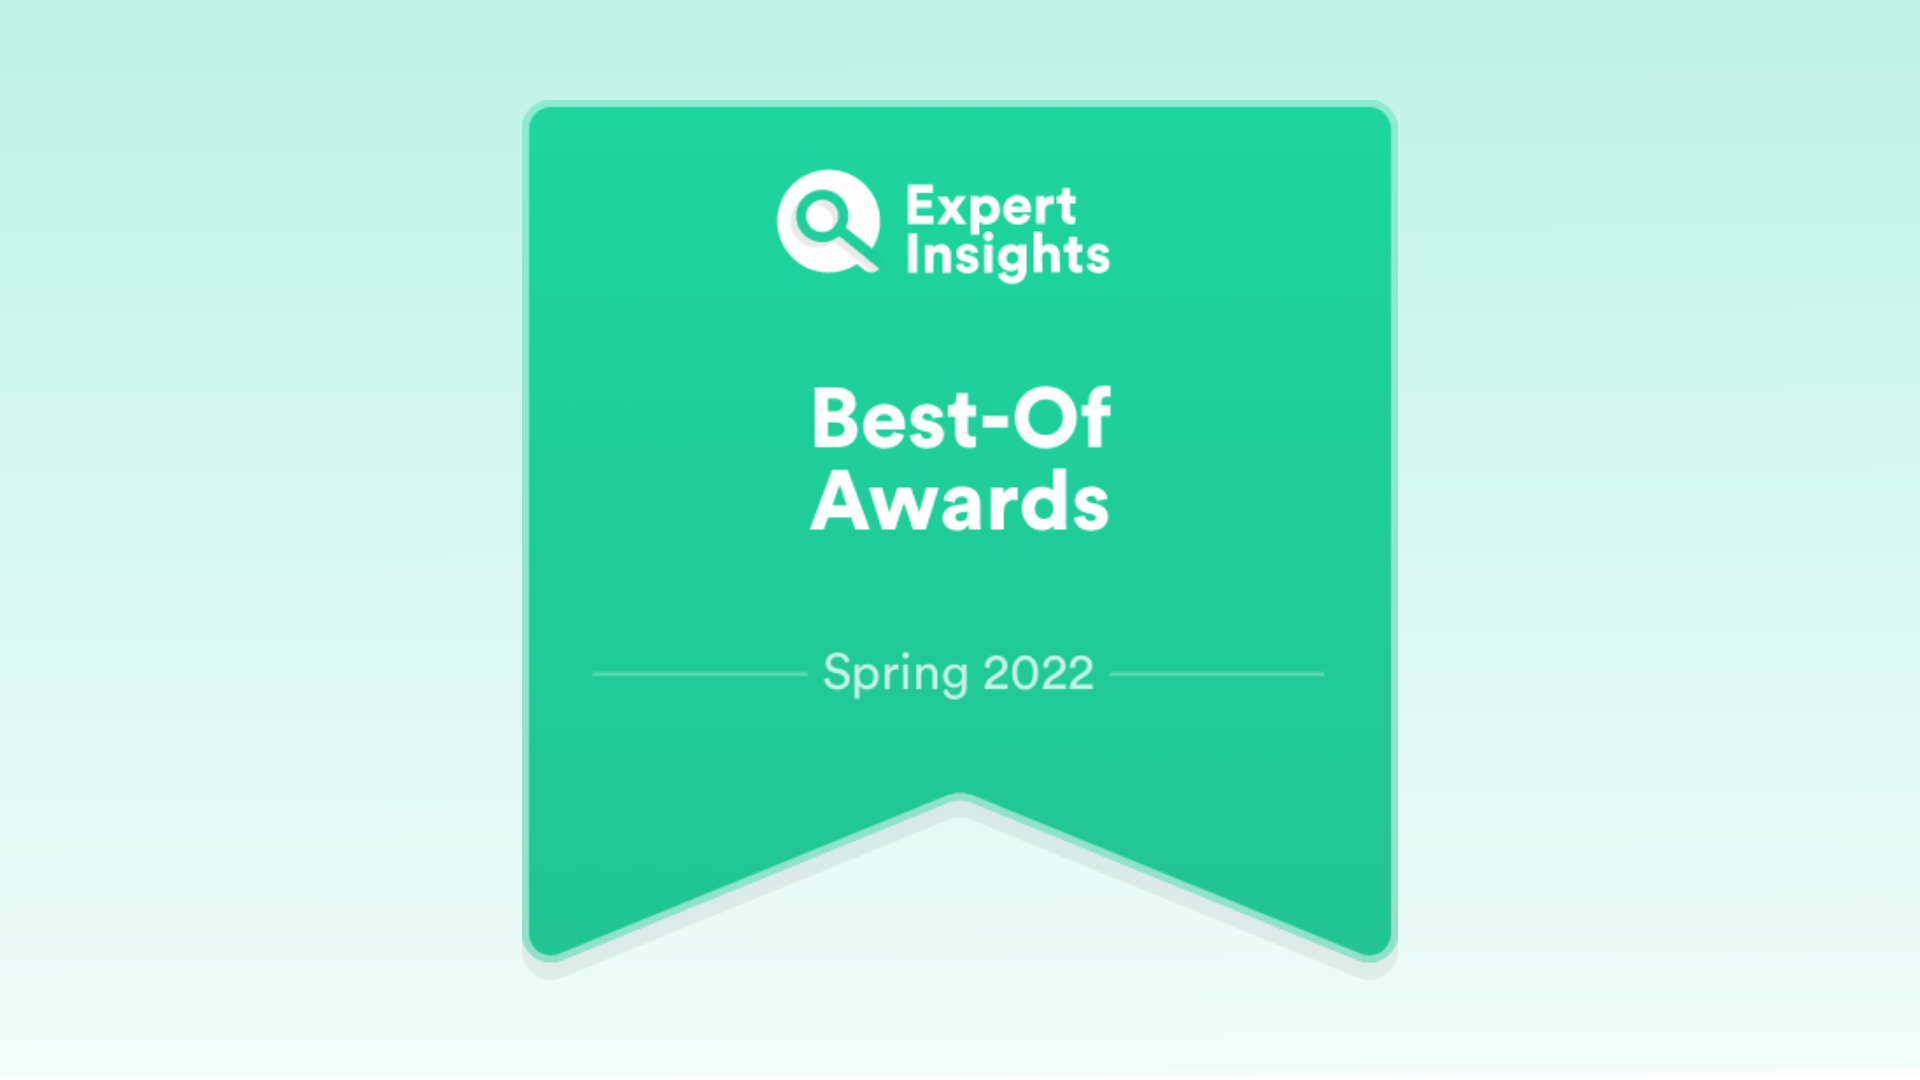 Expert Insights Best-Of Award Winners Spring 2022